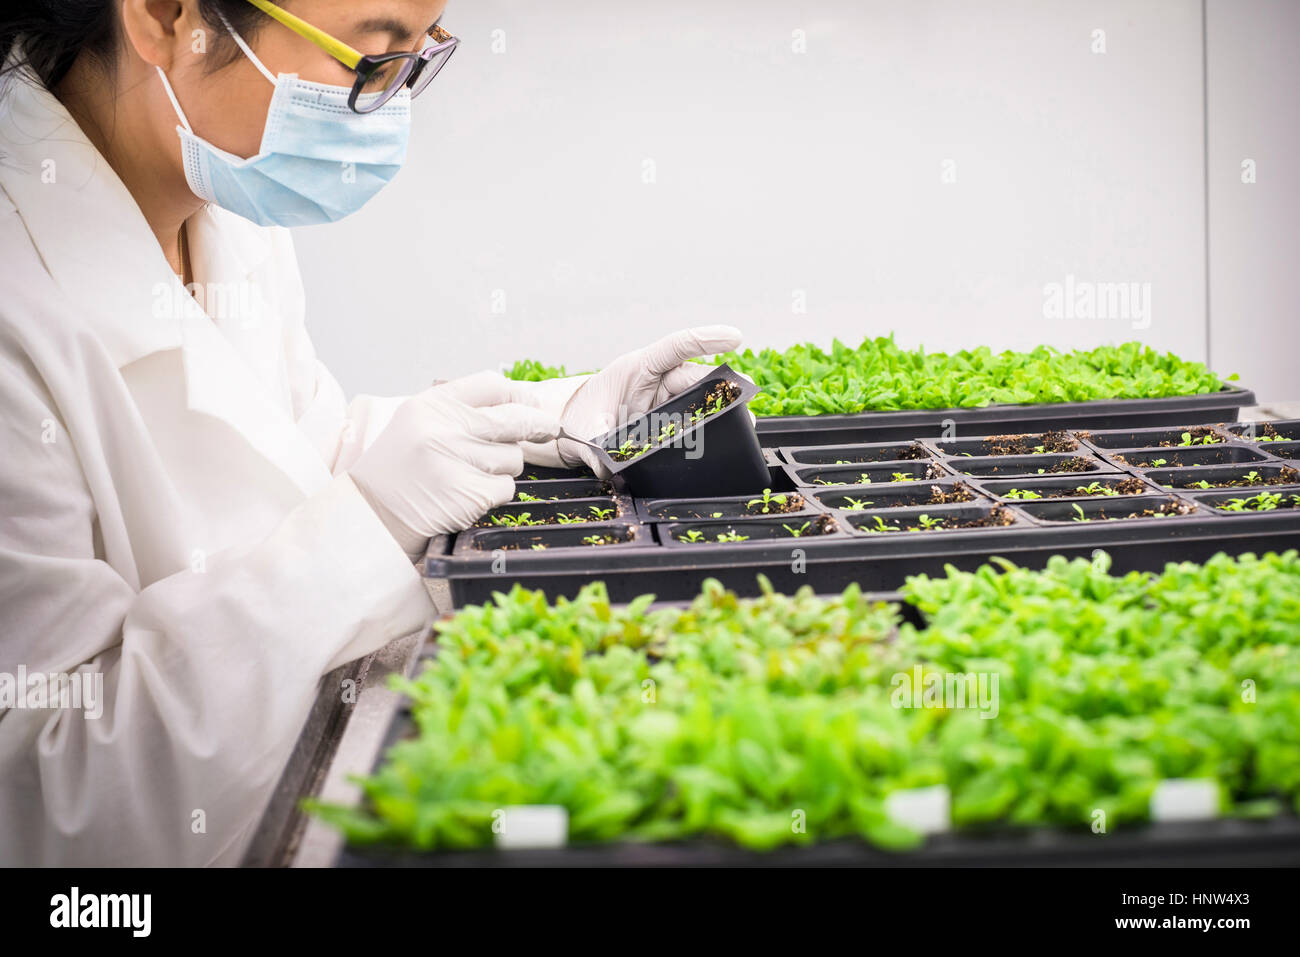 Asian scientist examining plants in laboratory Stock Photo